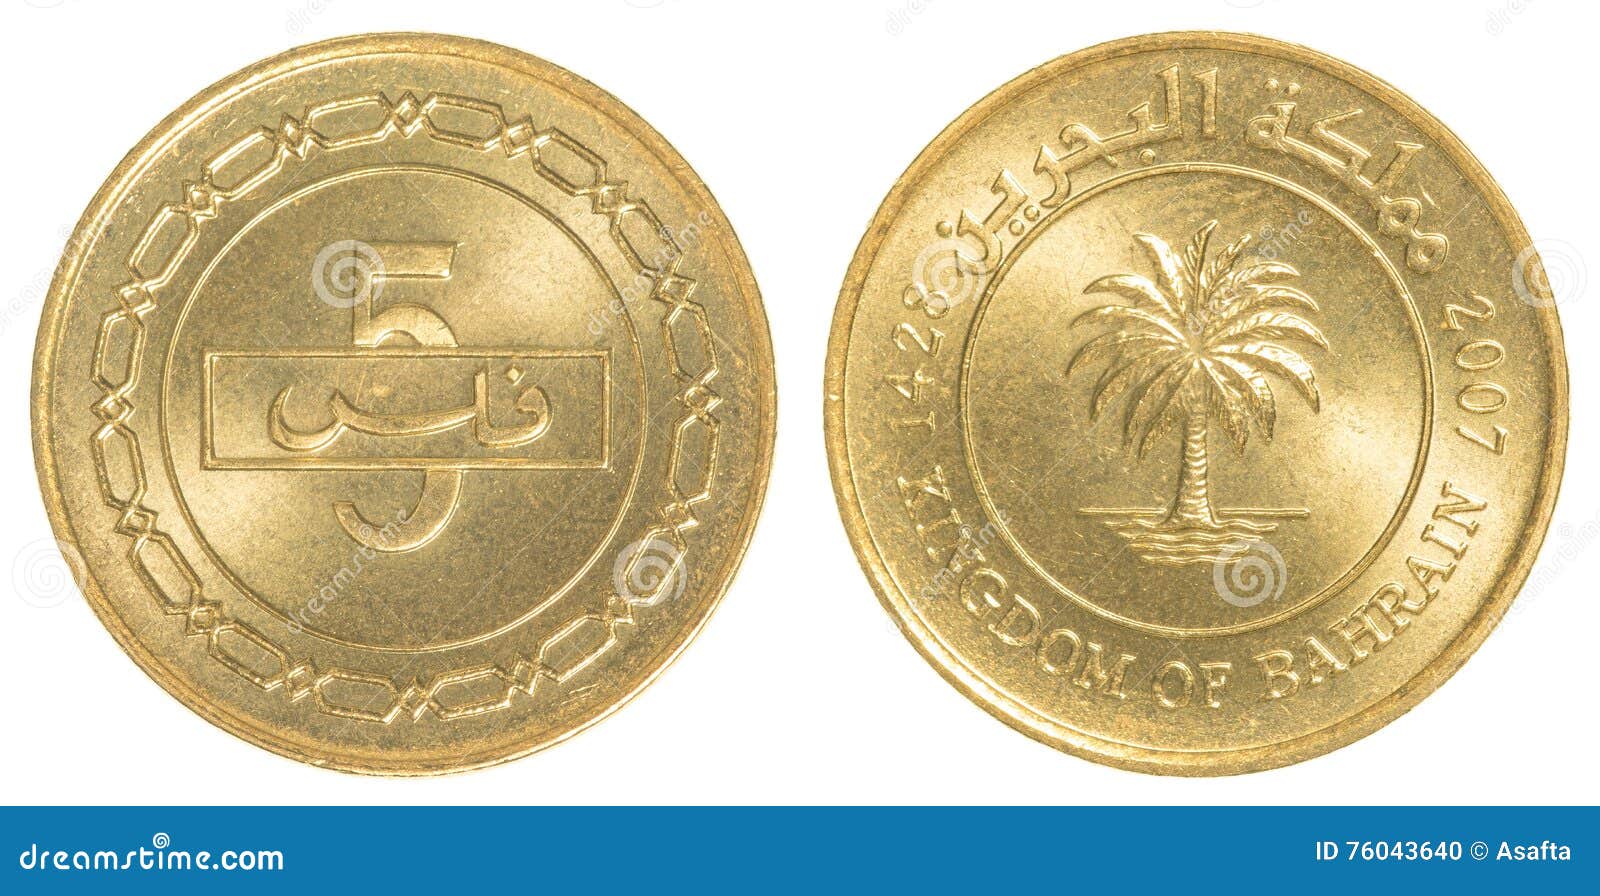 5 bahraini dinar coin